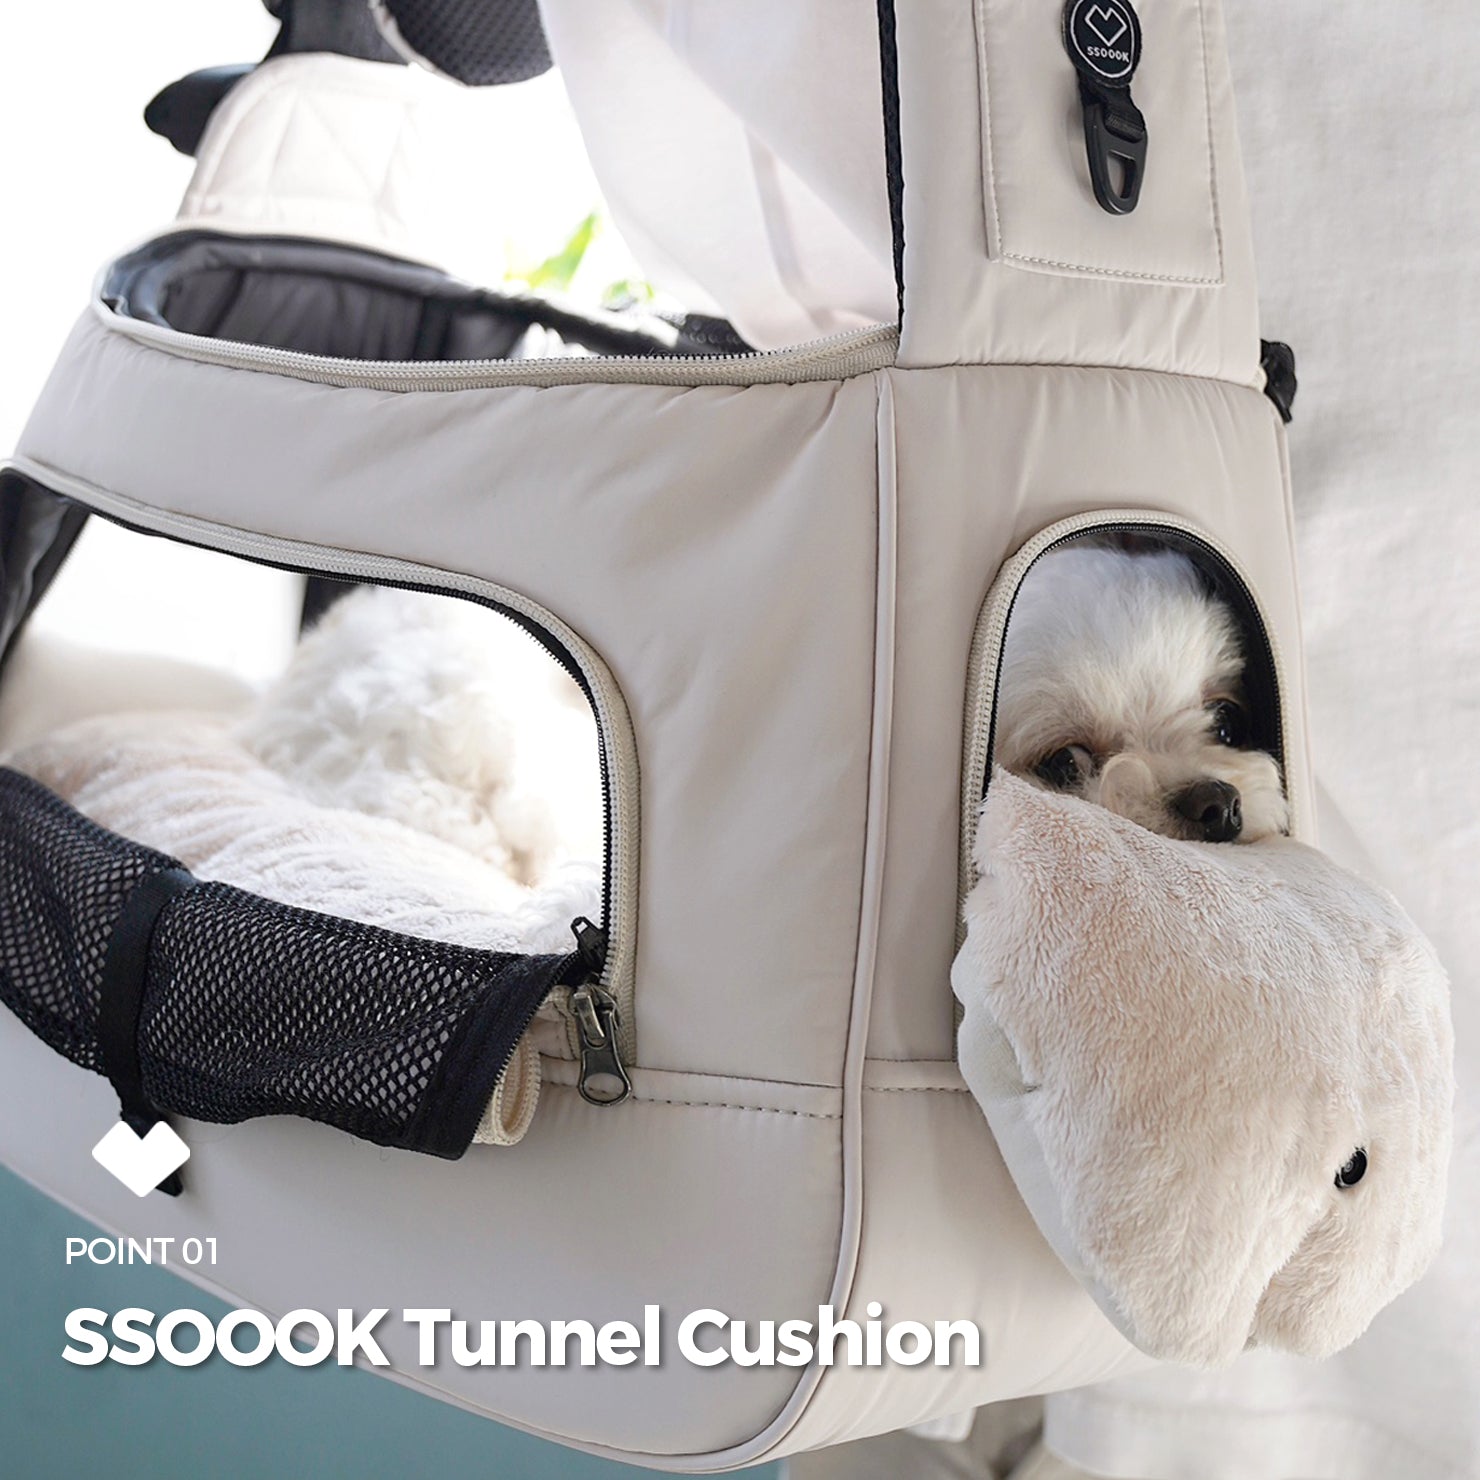 [SO-BD403] SSOOOK Tunnel-Shaped Cushion Set (Sling Bag Microfiber Cushion)